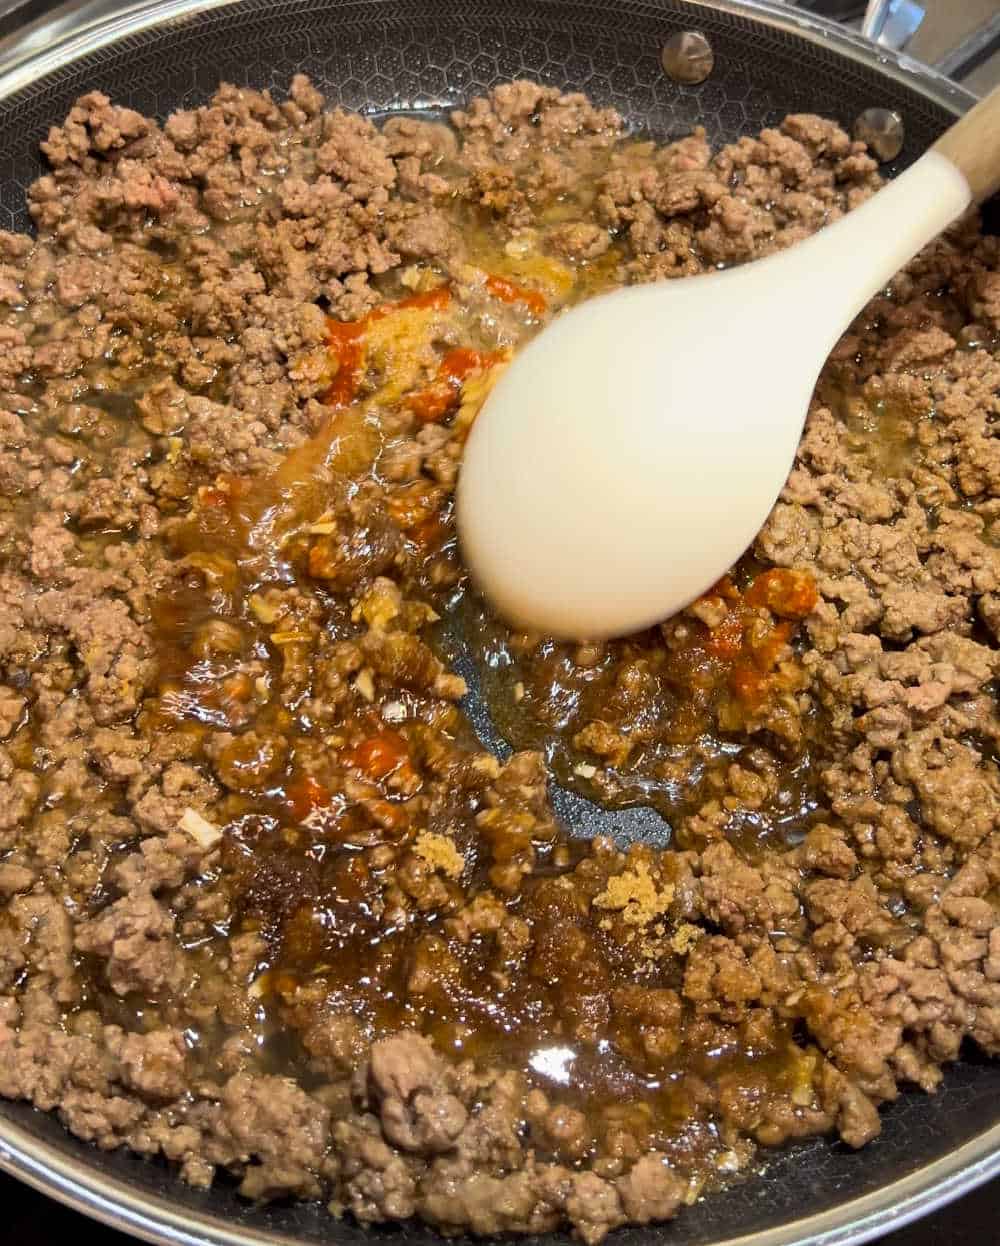 stir sauce ingredients into beef.